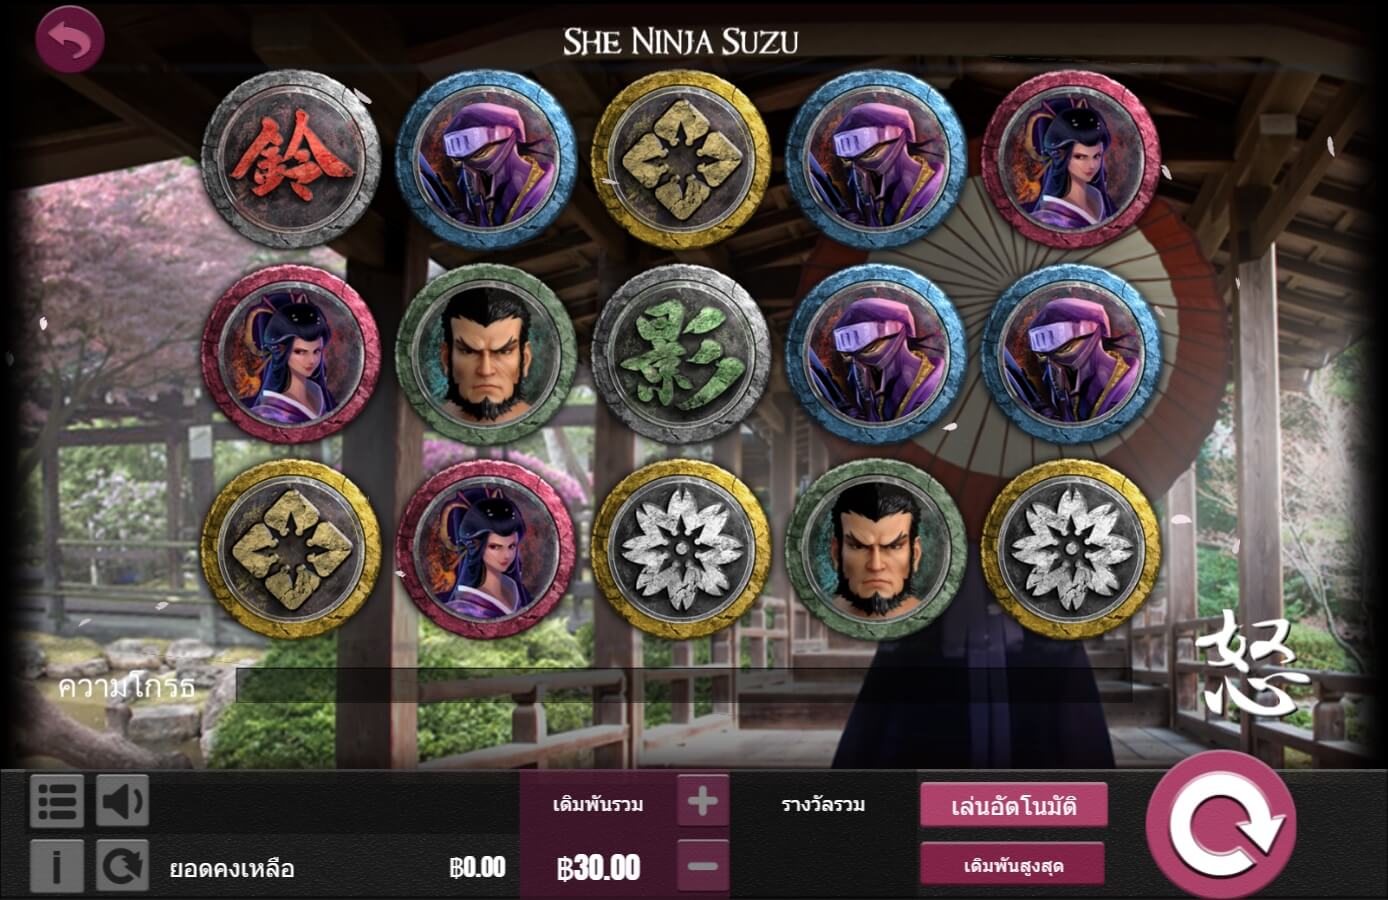 She Ninja Suzu Gamatron ทางเข้า Superslot Wallet